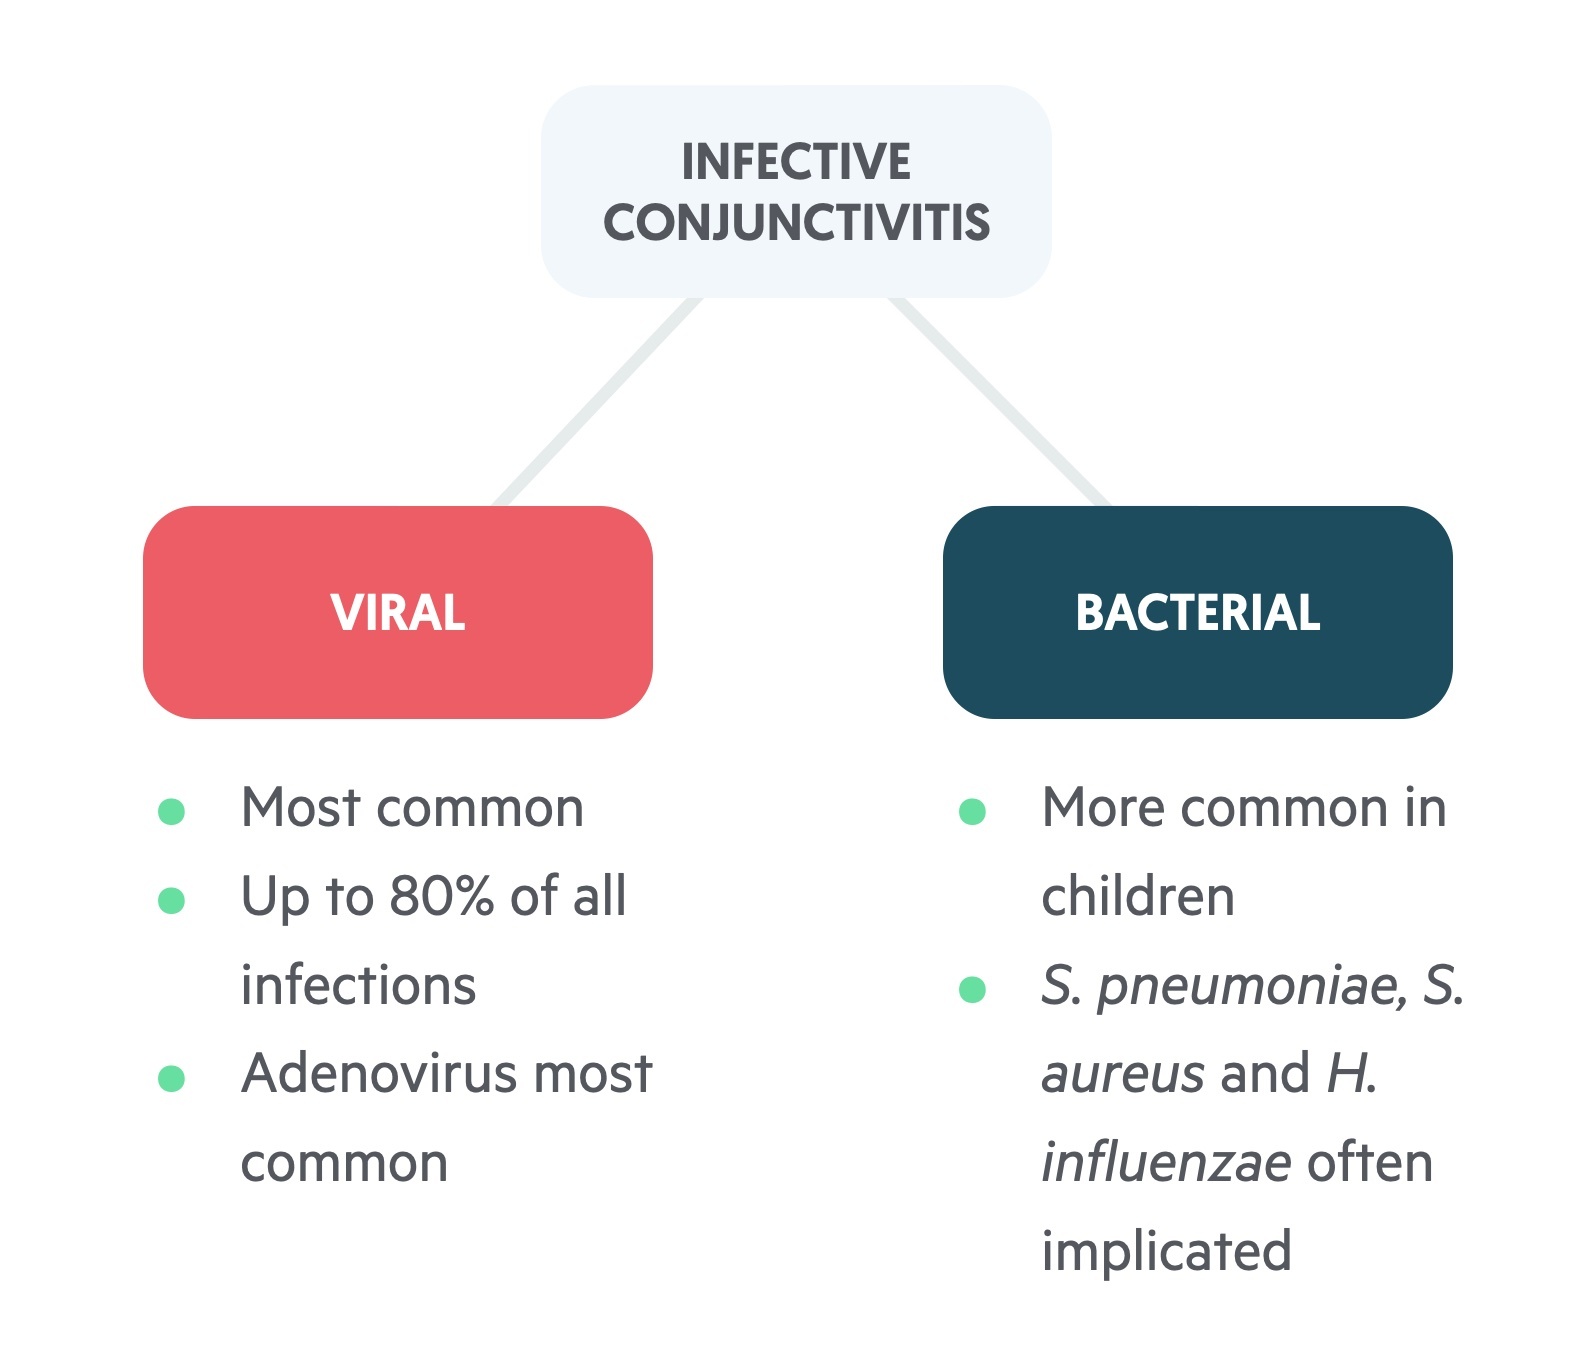 Infective conjunctivitis